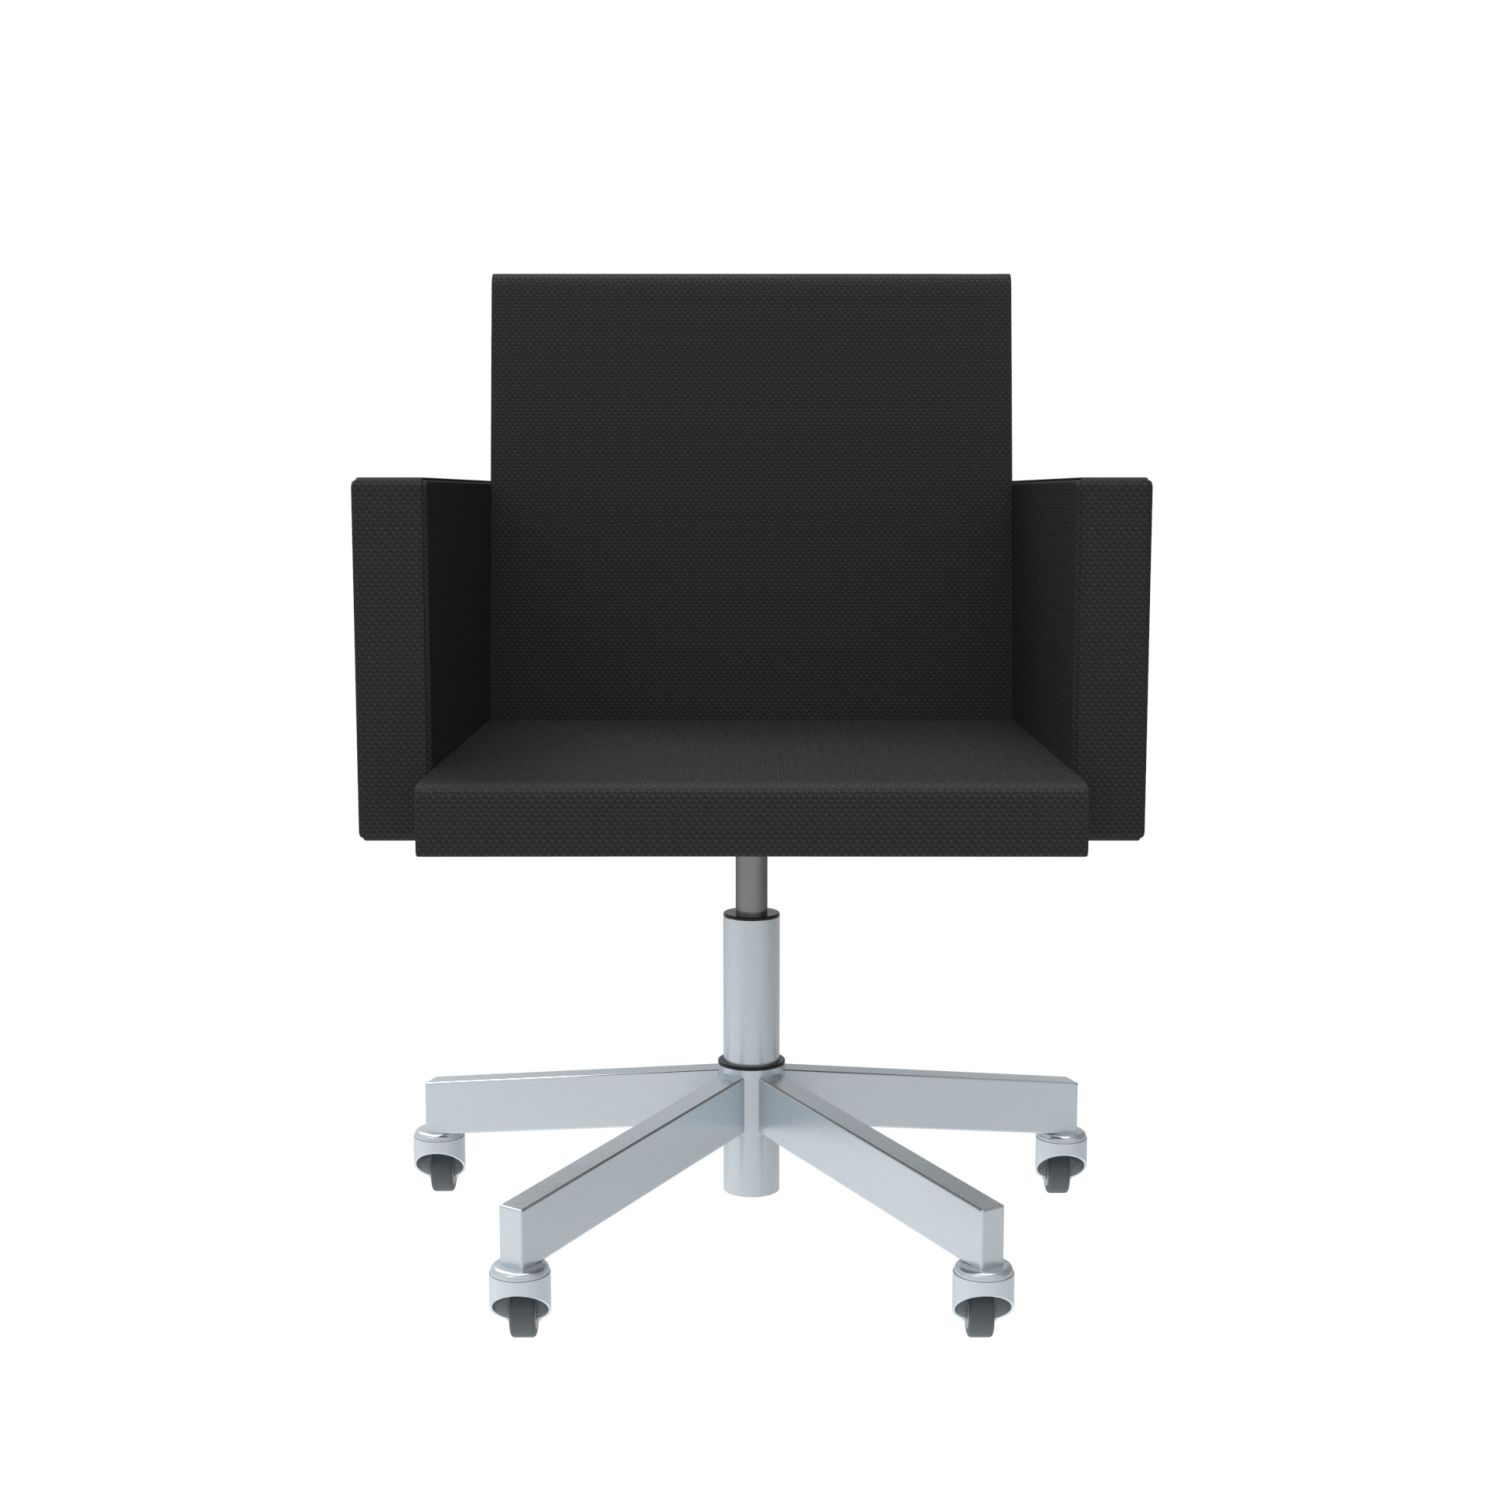 lensvelt atelier van lieshout office chair with armrests havana black 090 galvanized soft rolls